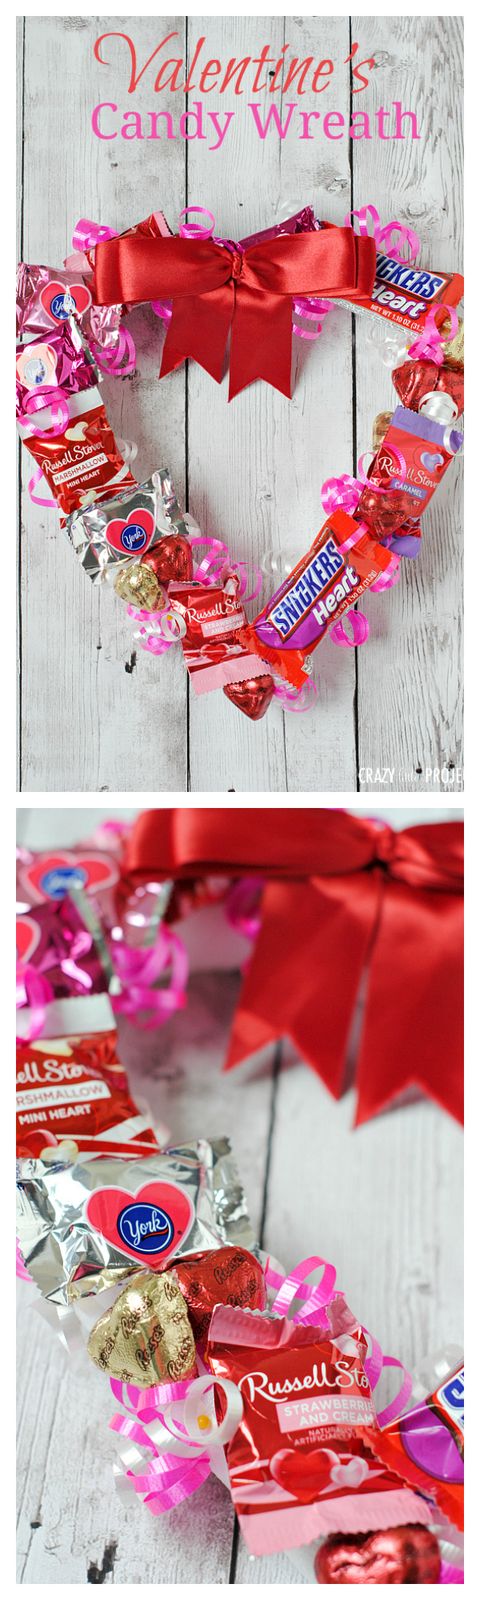 valentines wreaths candy